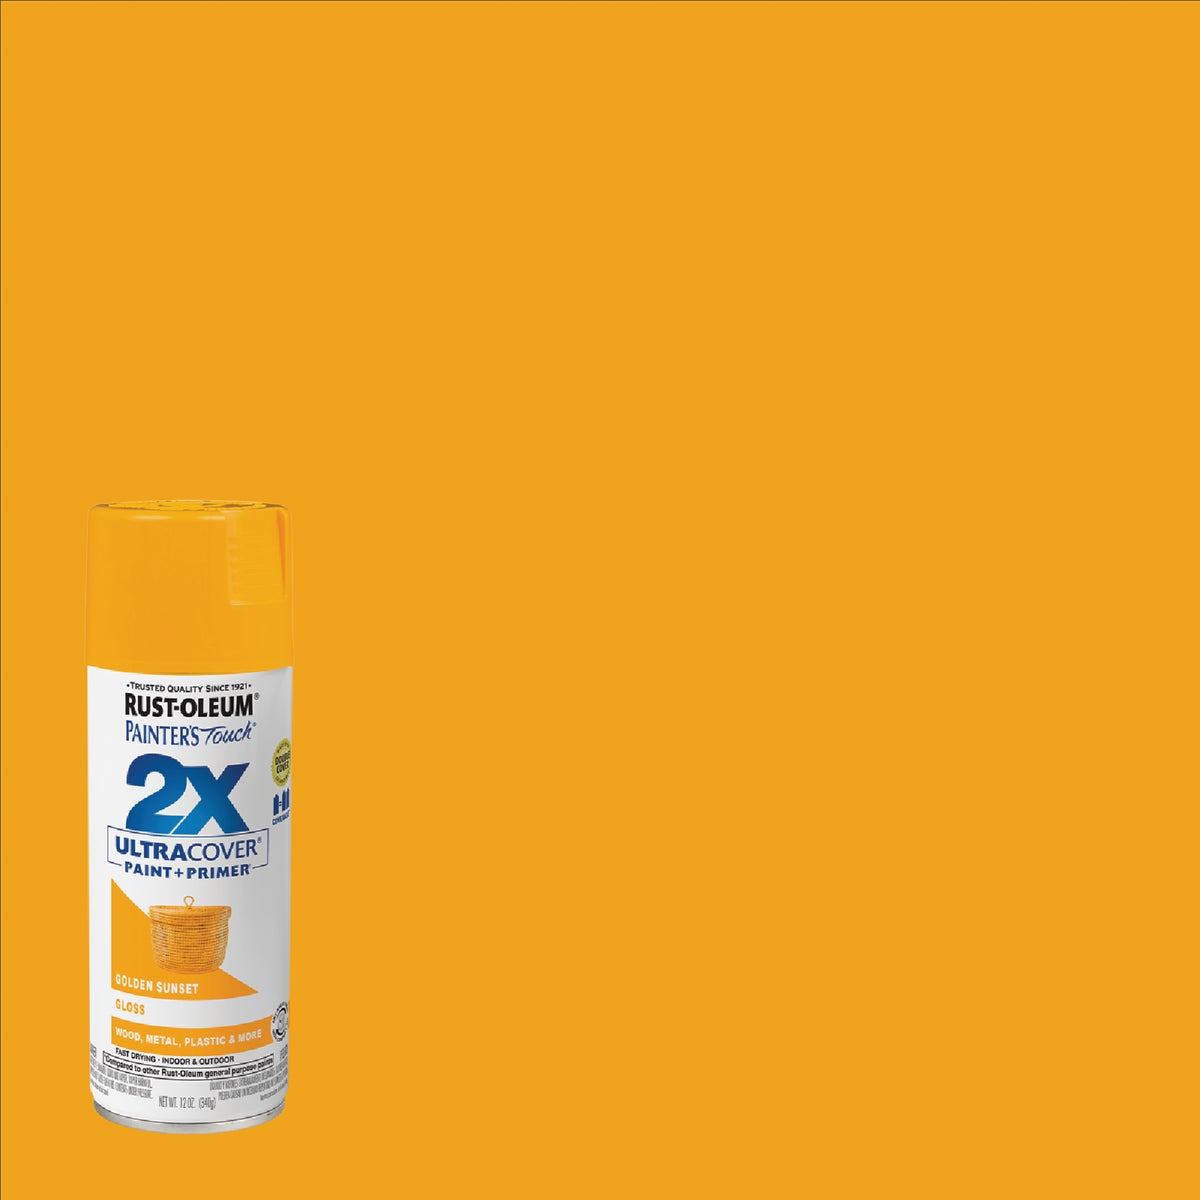 Rust-Oleum Painter's Touch 2X Ultra Cover 12 Oz. Gloss Paint + Primer Spray Paint, Golden Sunset